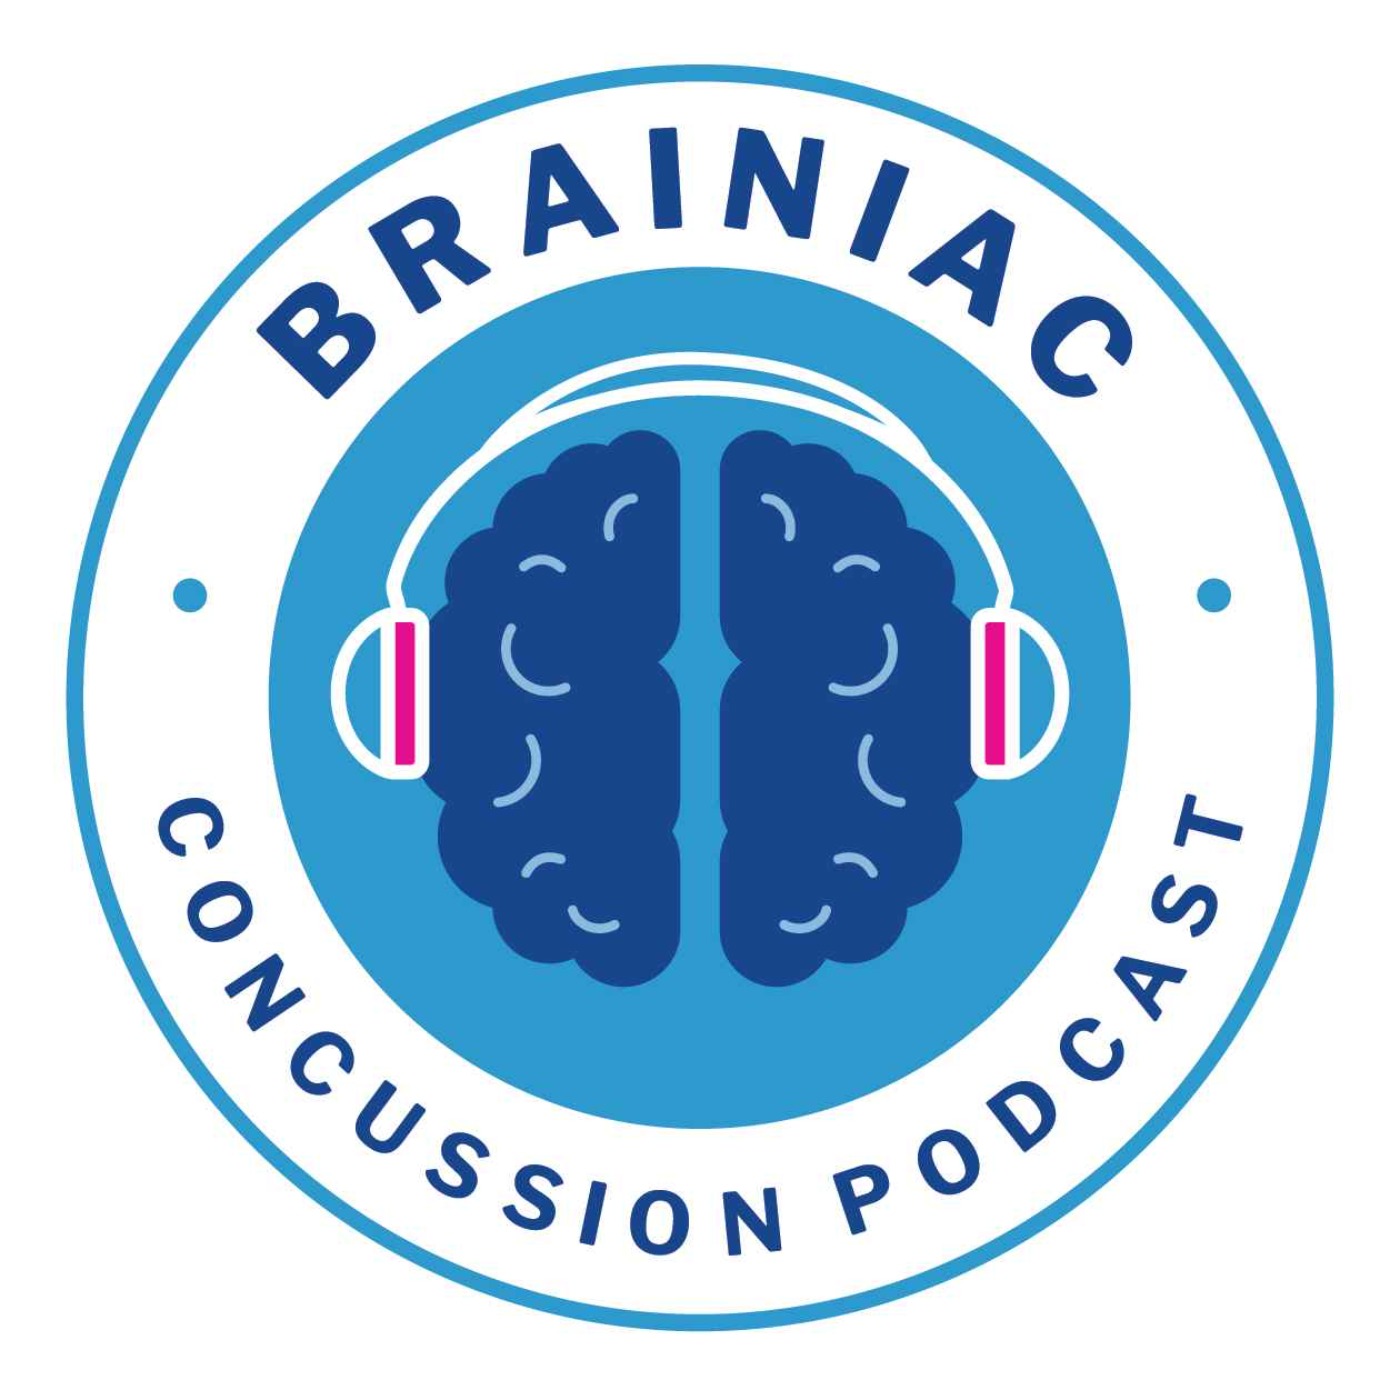 Brainiac - Concussion Phenotypes (Sub-types) Image